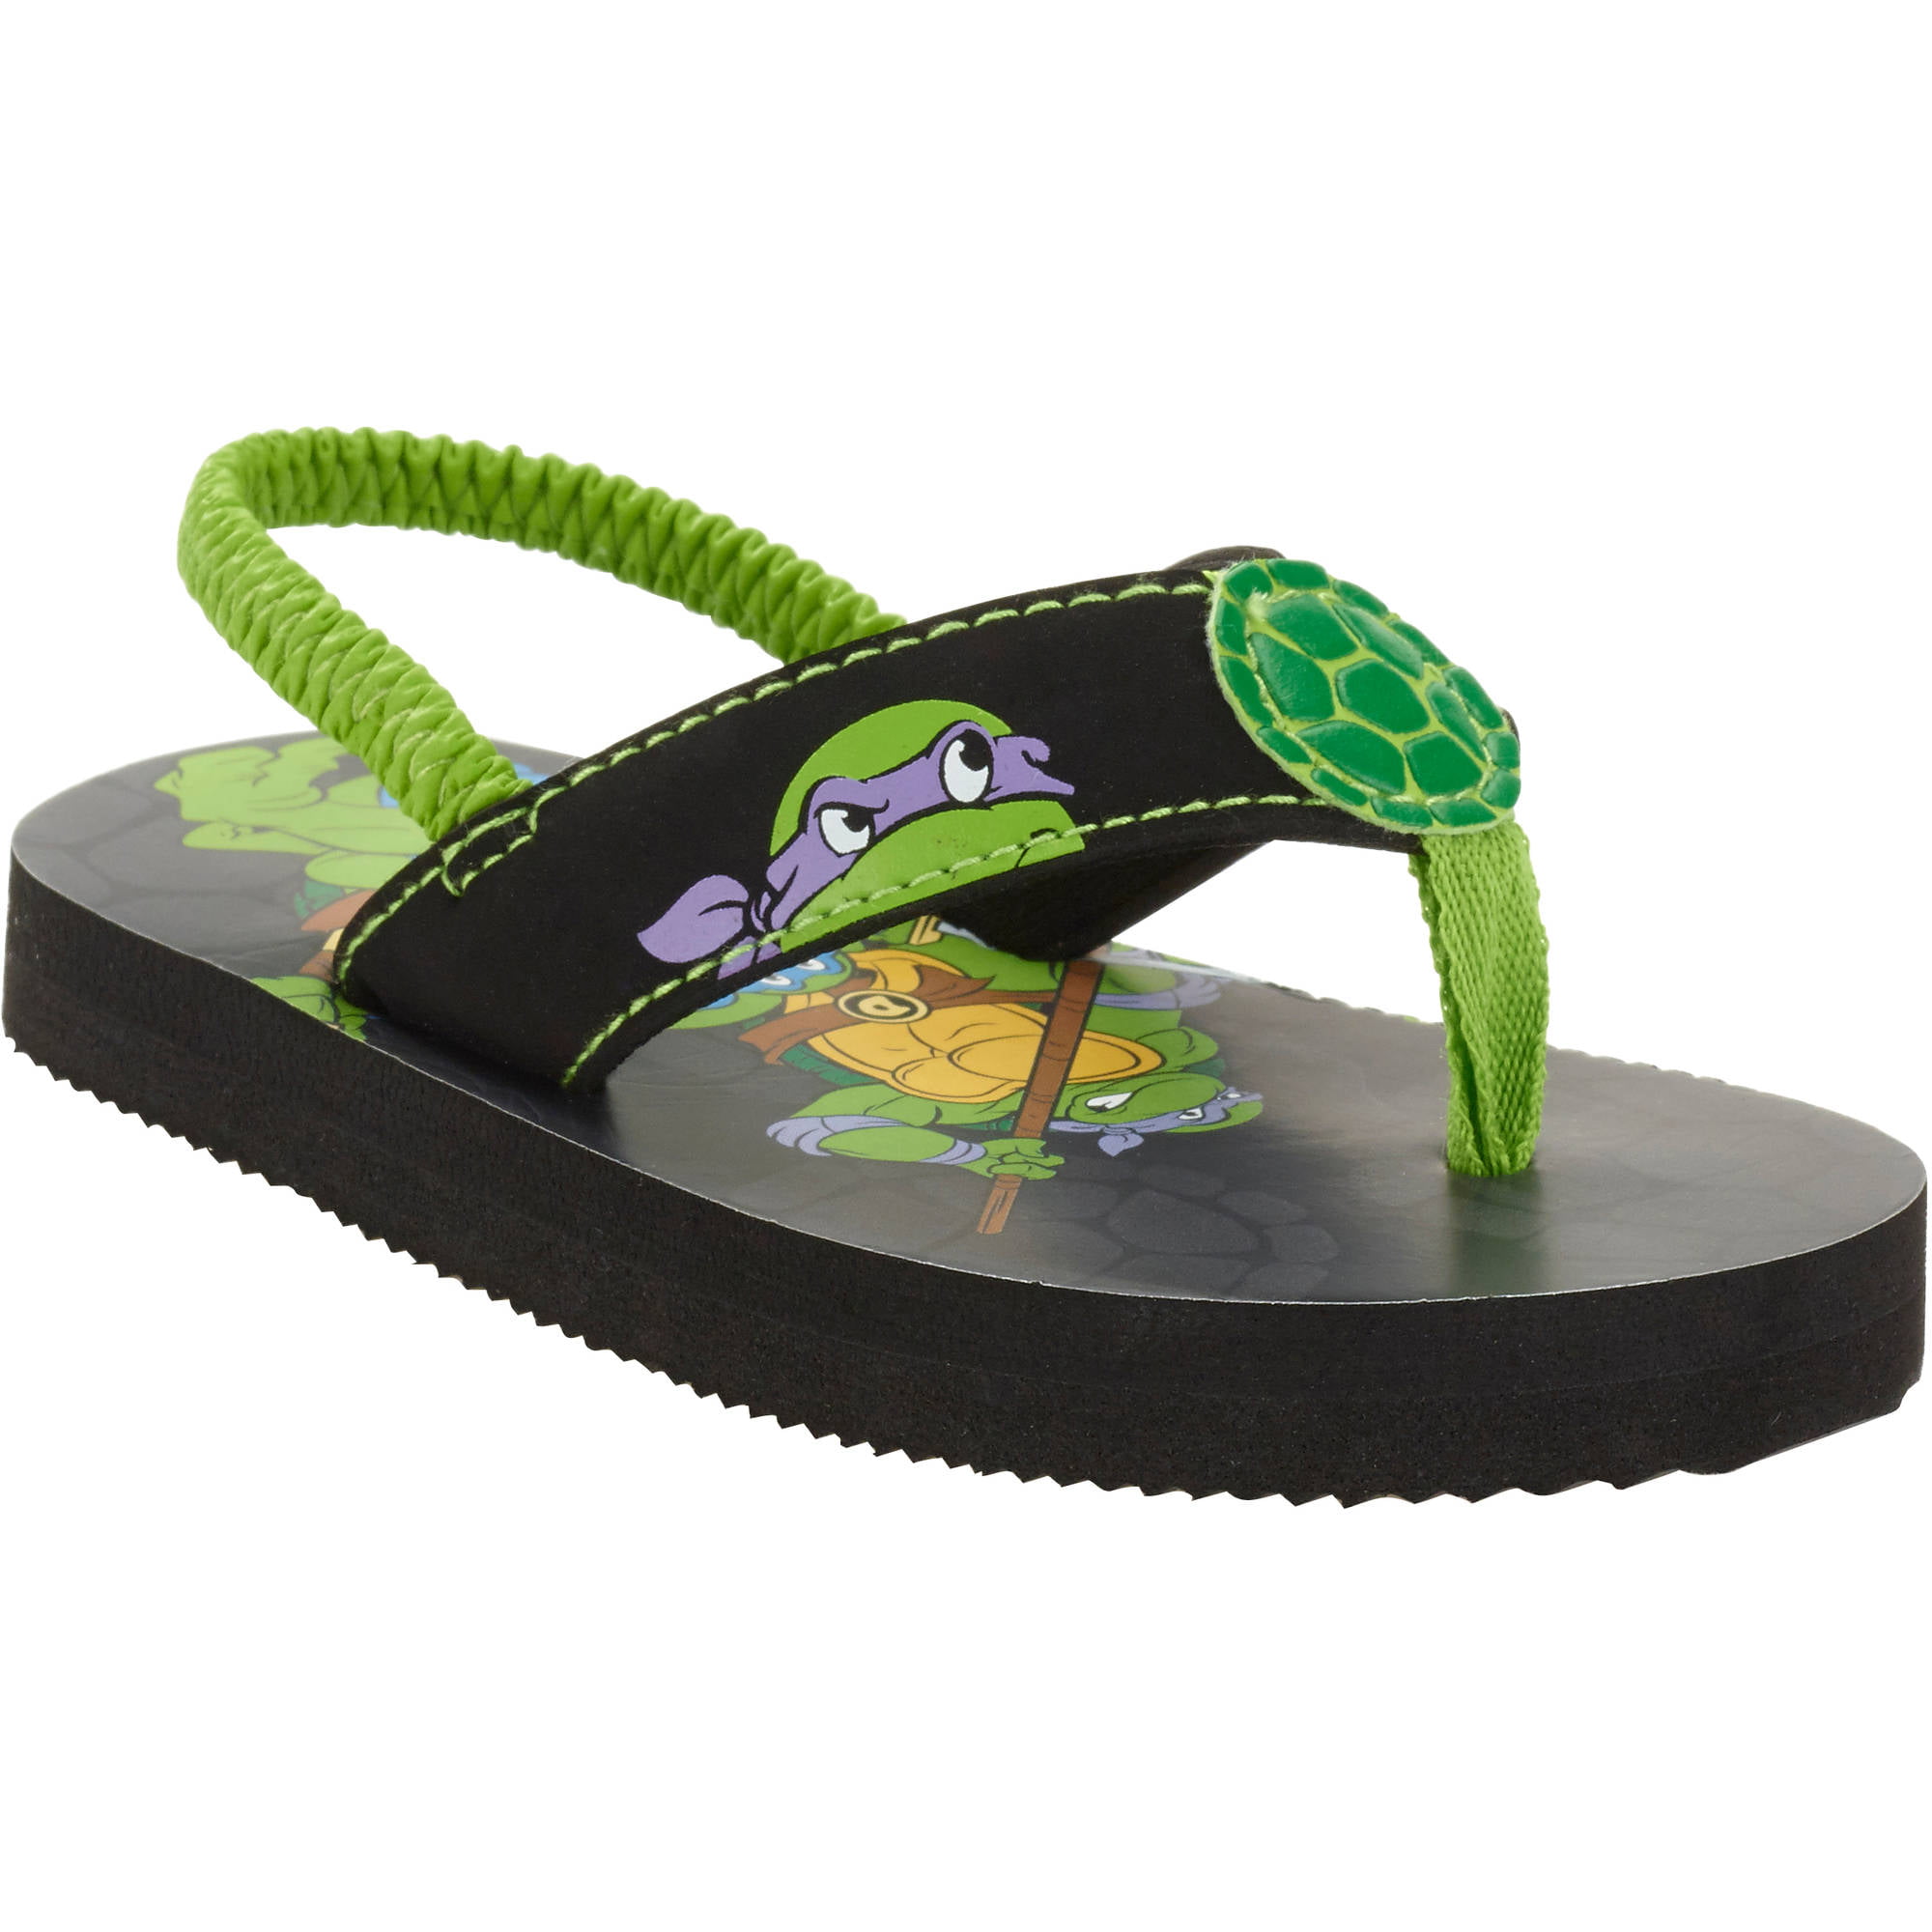 Teenage Mutant Ninja Turtles Boys Flip Flops shoes Sandals Size Sm Md 